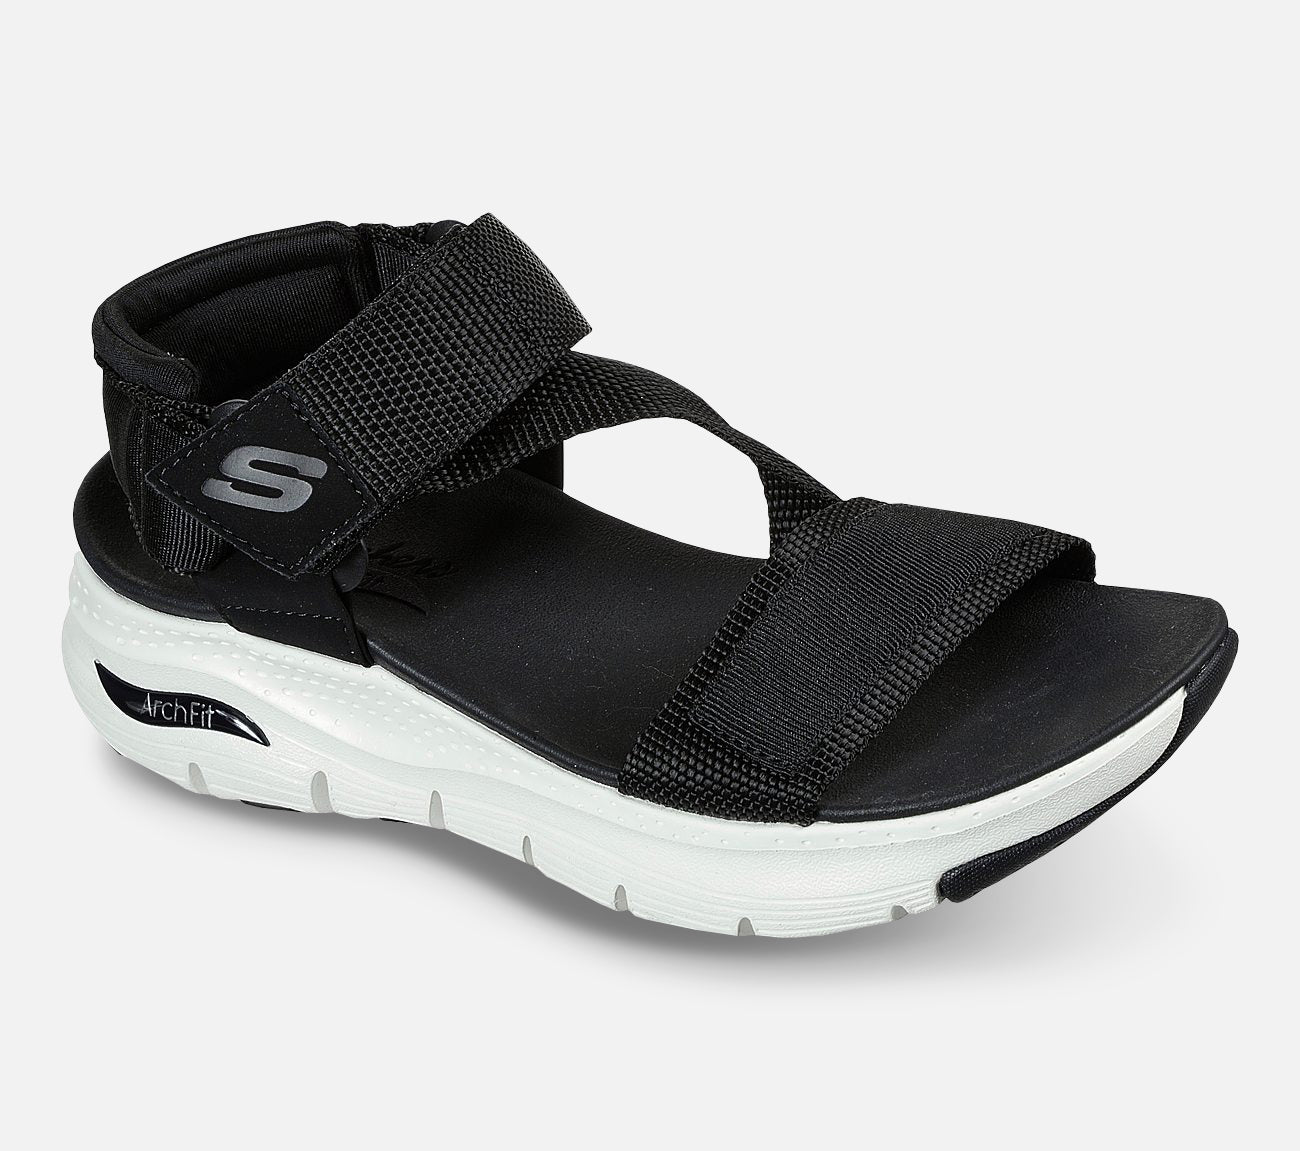 Arch Fit - Casual Retro Sandal Skechers